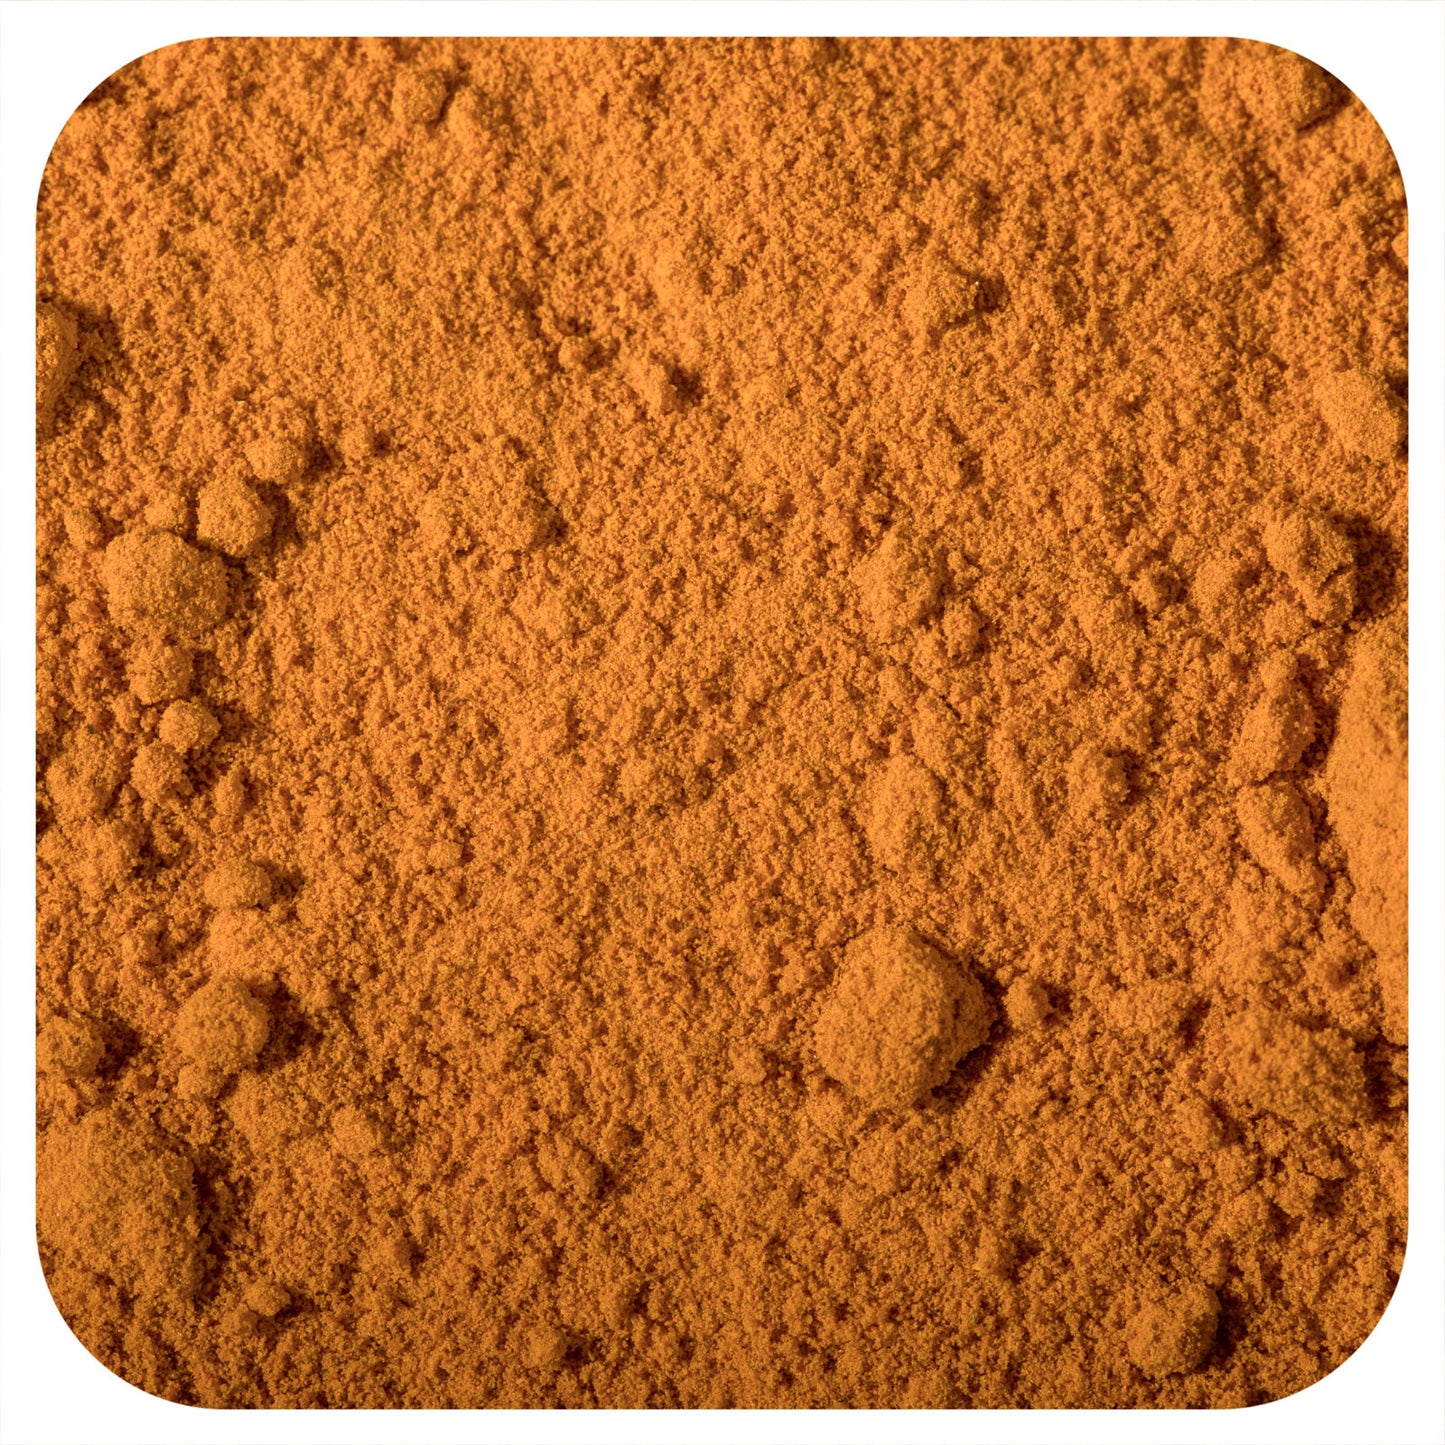 California Gold Nutrition, SUPERFOODS - Organic Turmeric Powder, 4 oz (114 g)